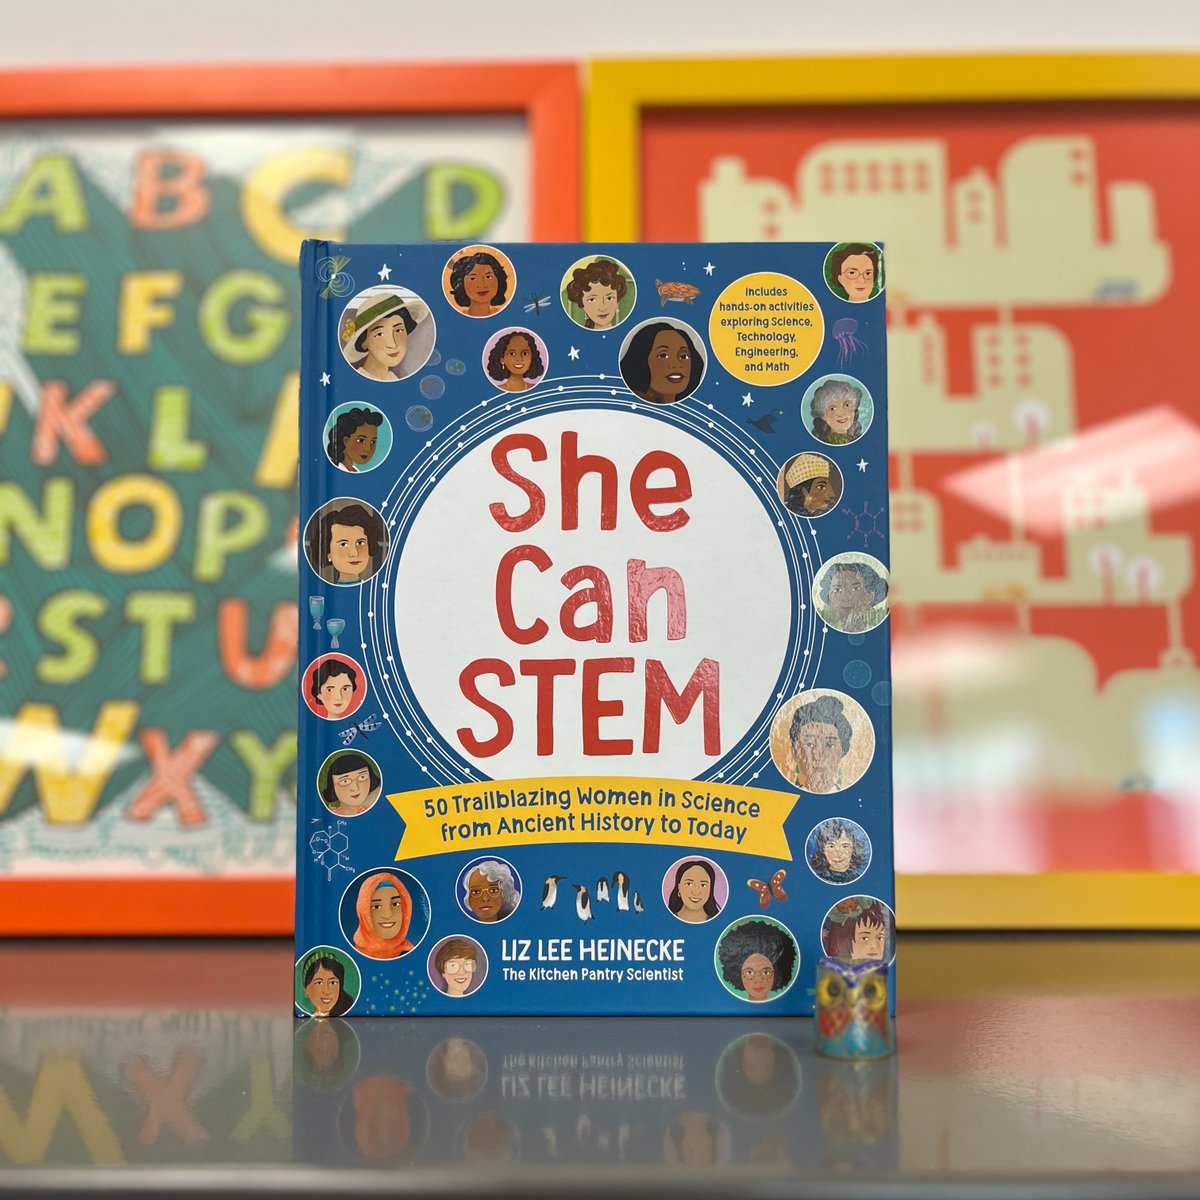 📚👩🏽‍🔬She Can STEM by Liz Lee Heinecke and illustrated by Kelly Anne Dalton. #dailybutlershelfie #InternationalWomensDay #SheCanSTEM @KitchPantrySci @kellyannedalton @QuartoBooksUS